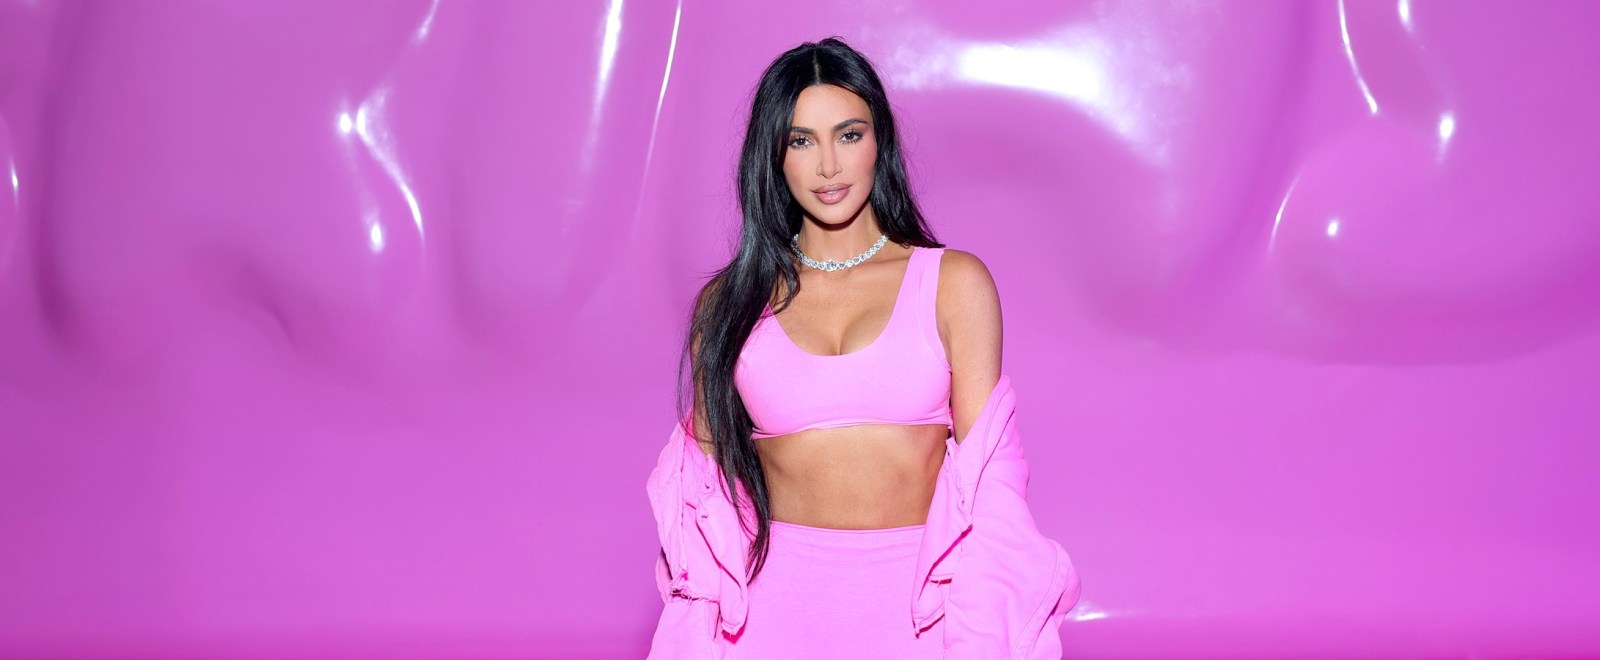 Kim Kardashian's Innerwear Brand Skims Introduces Its Very First Men's Line  With Brazilian Footballer Neymar Jr. Leading The Model Line-Up